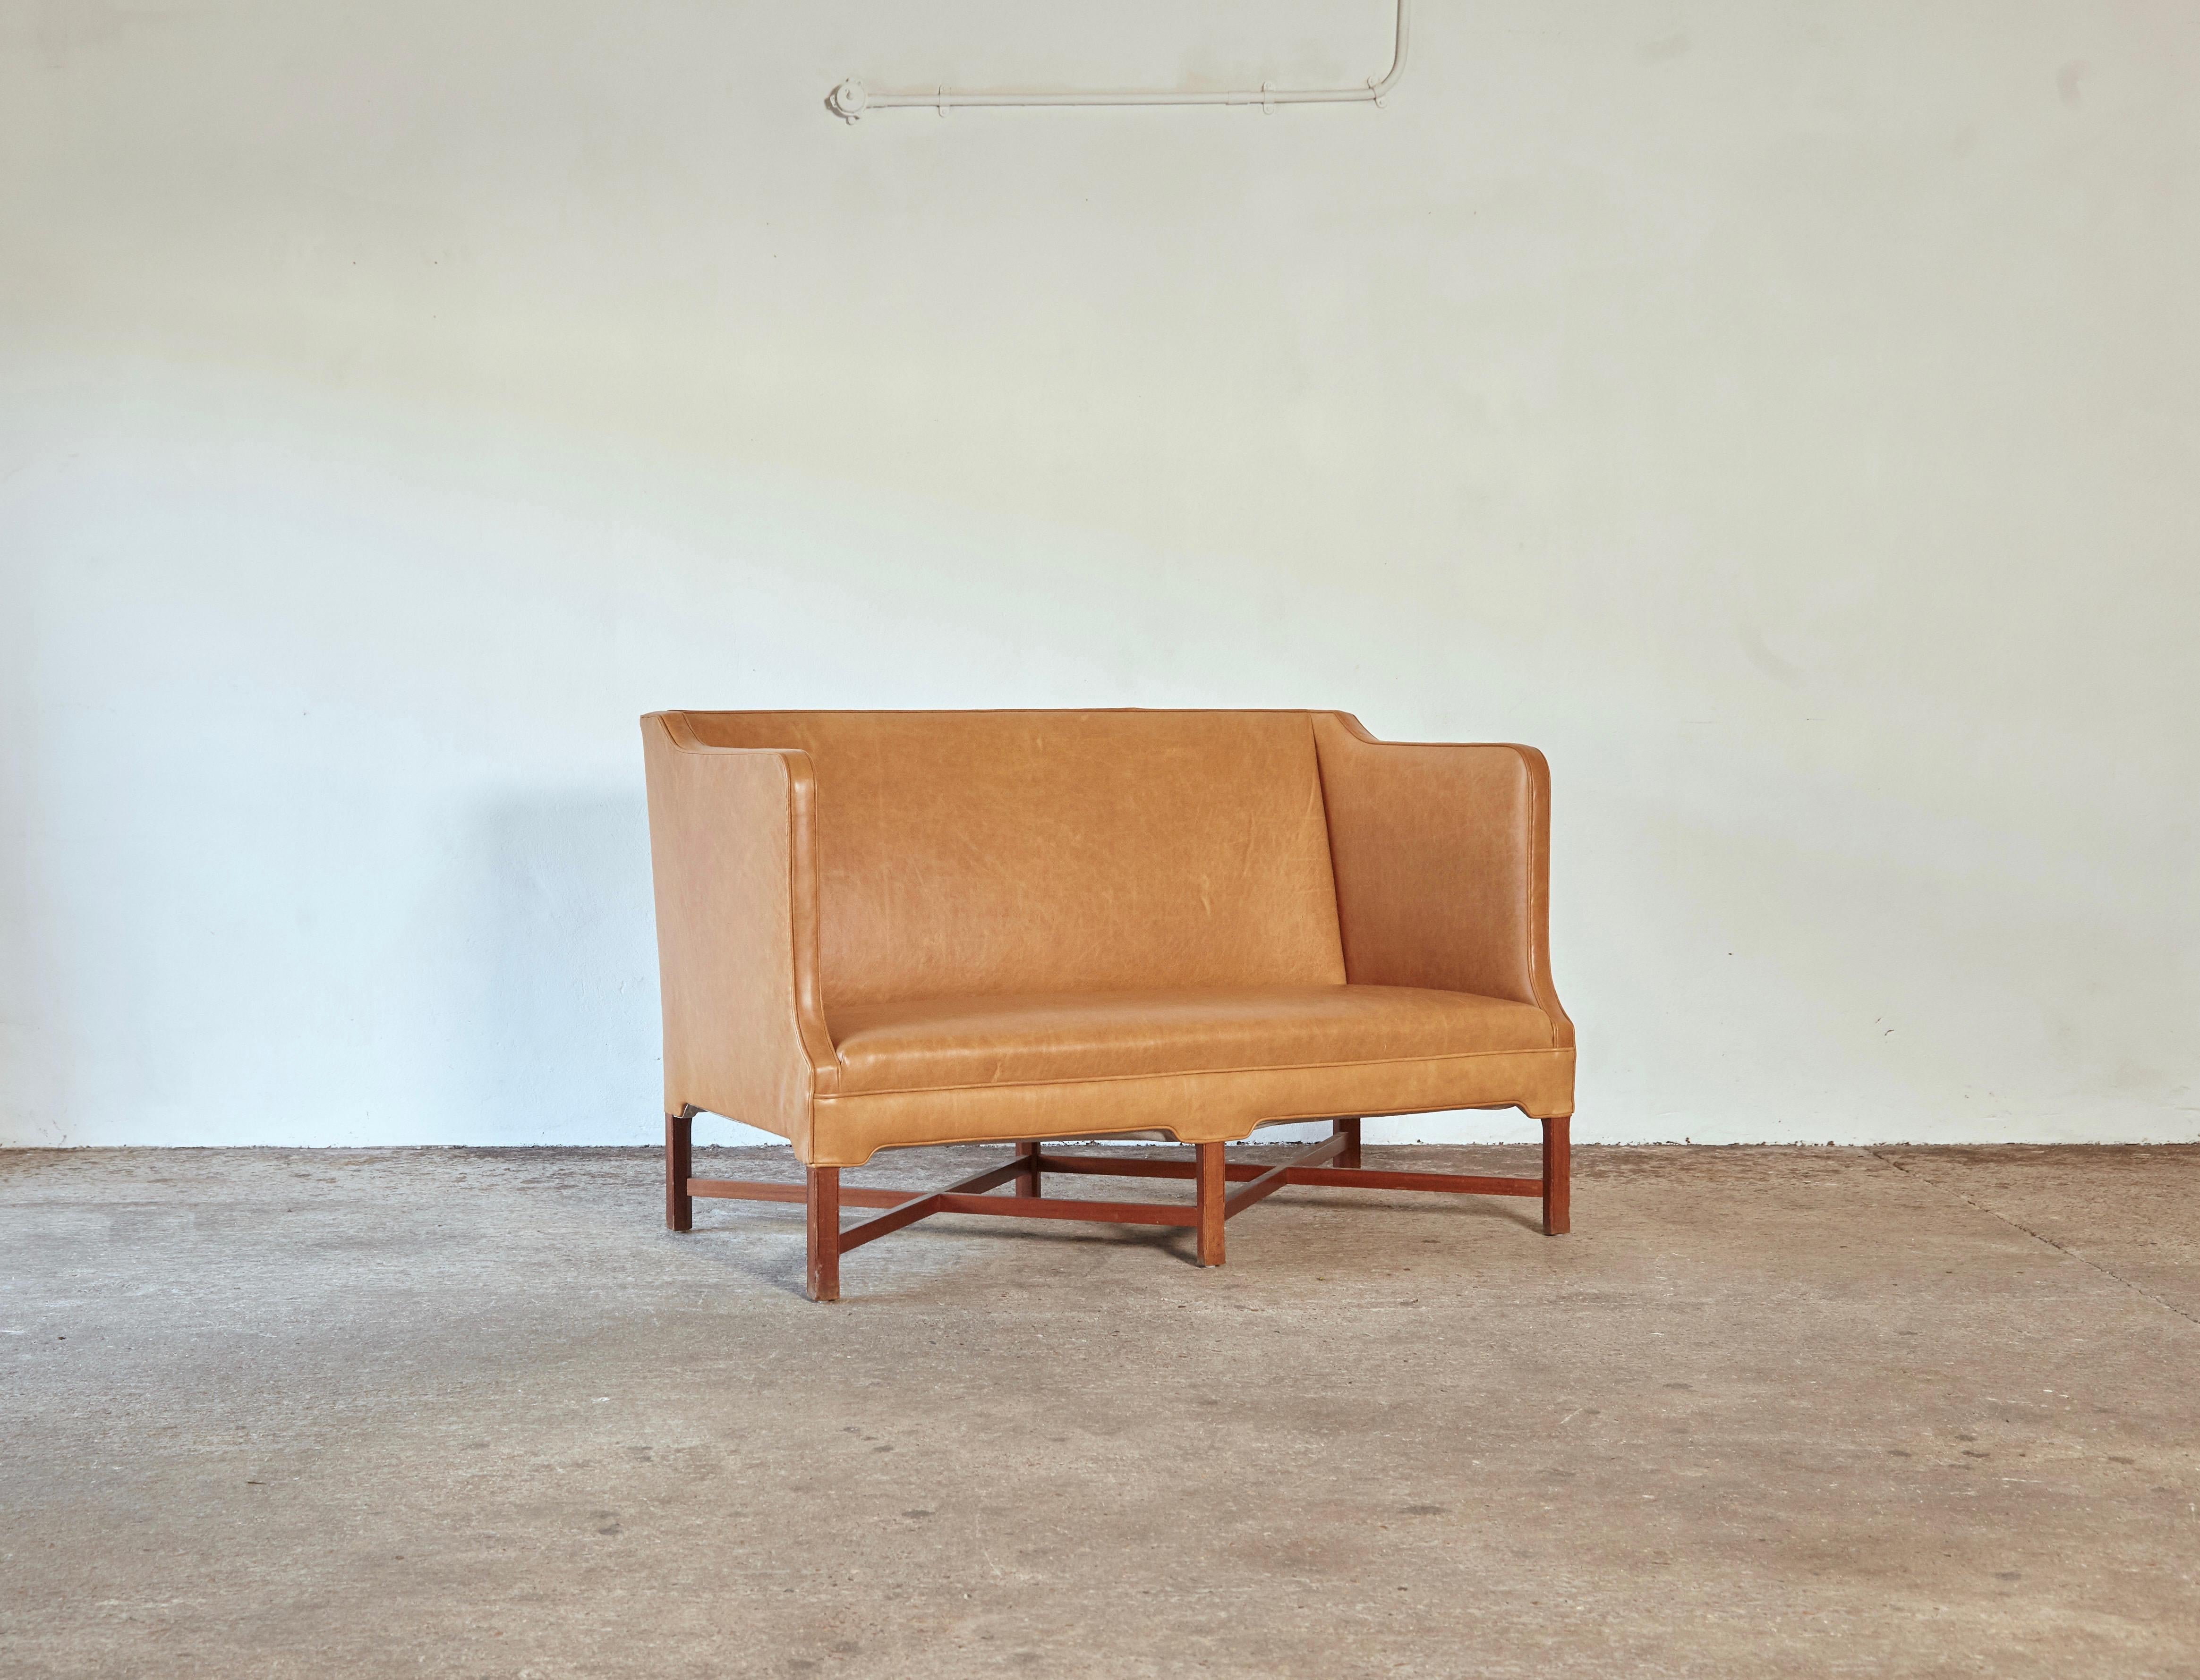 Rare Kaare Klint Model 4118 two-seat box sofa with profiled cross legged mahogany frame. Made by Rud Rasmussen, Copenhagen, Denmark. Upholstered in cognac leather.

Measures: H 87 cm, W 135 cm, D 70 cm.